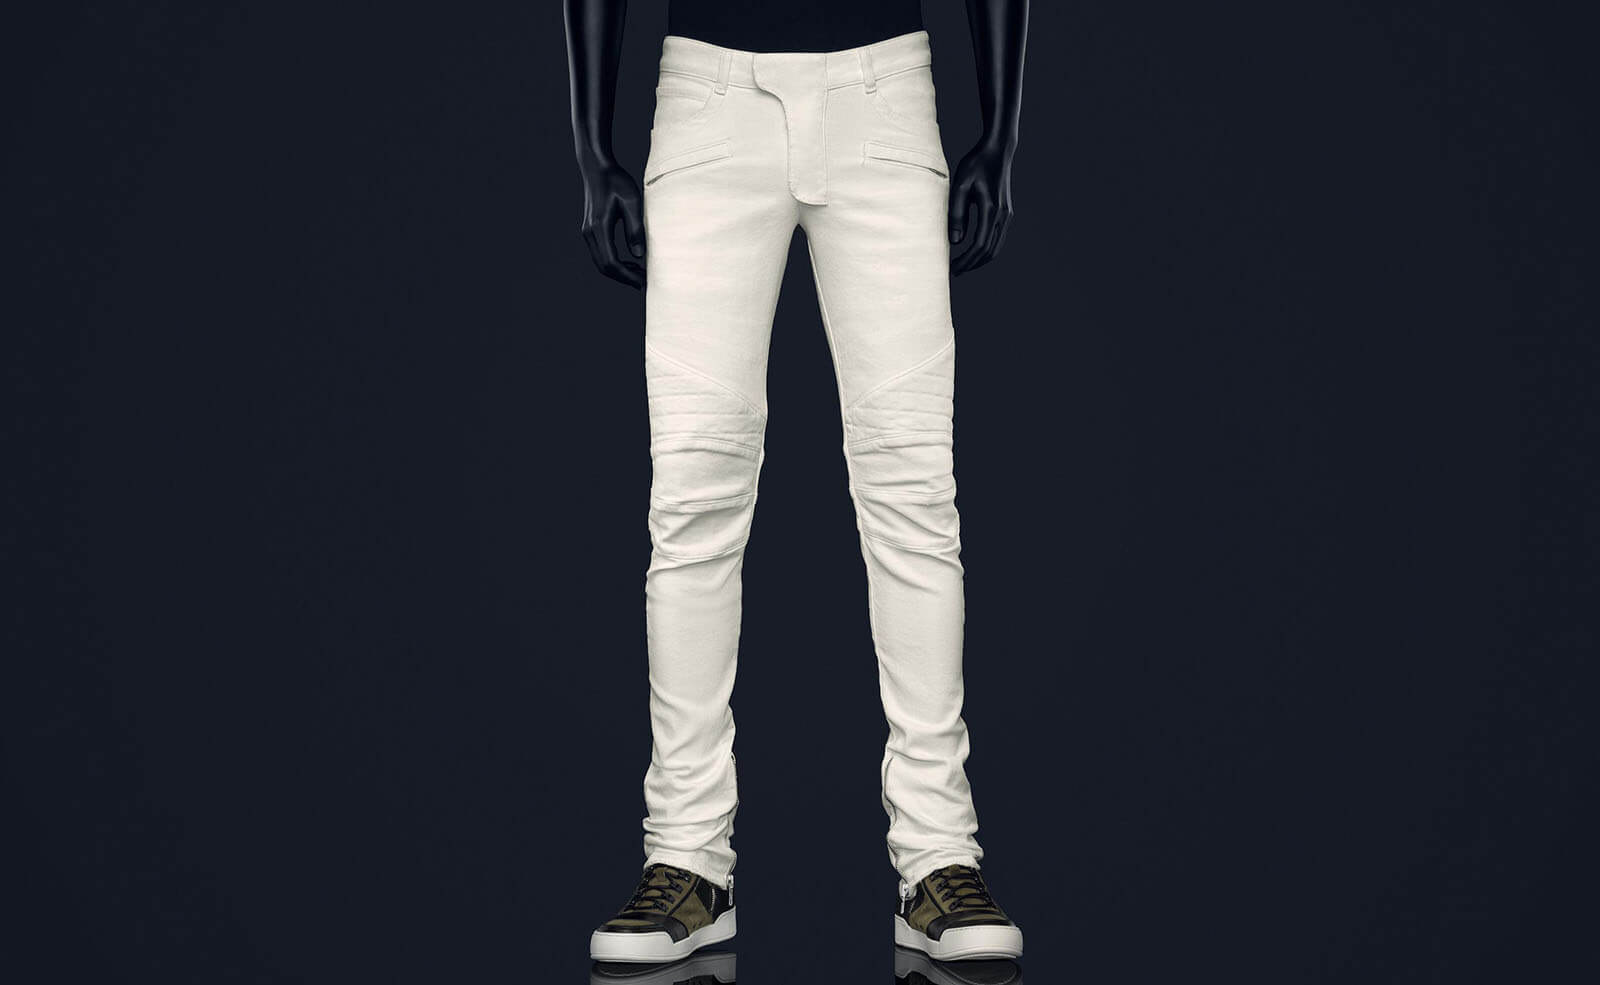 h&m balmain jeans